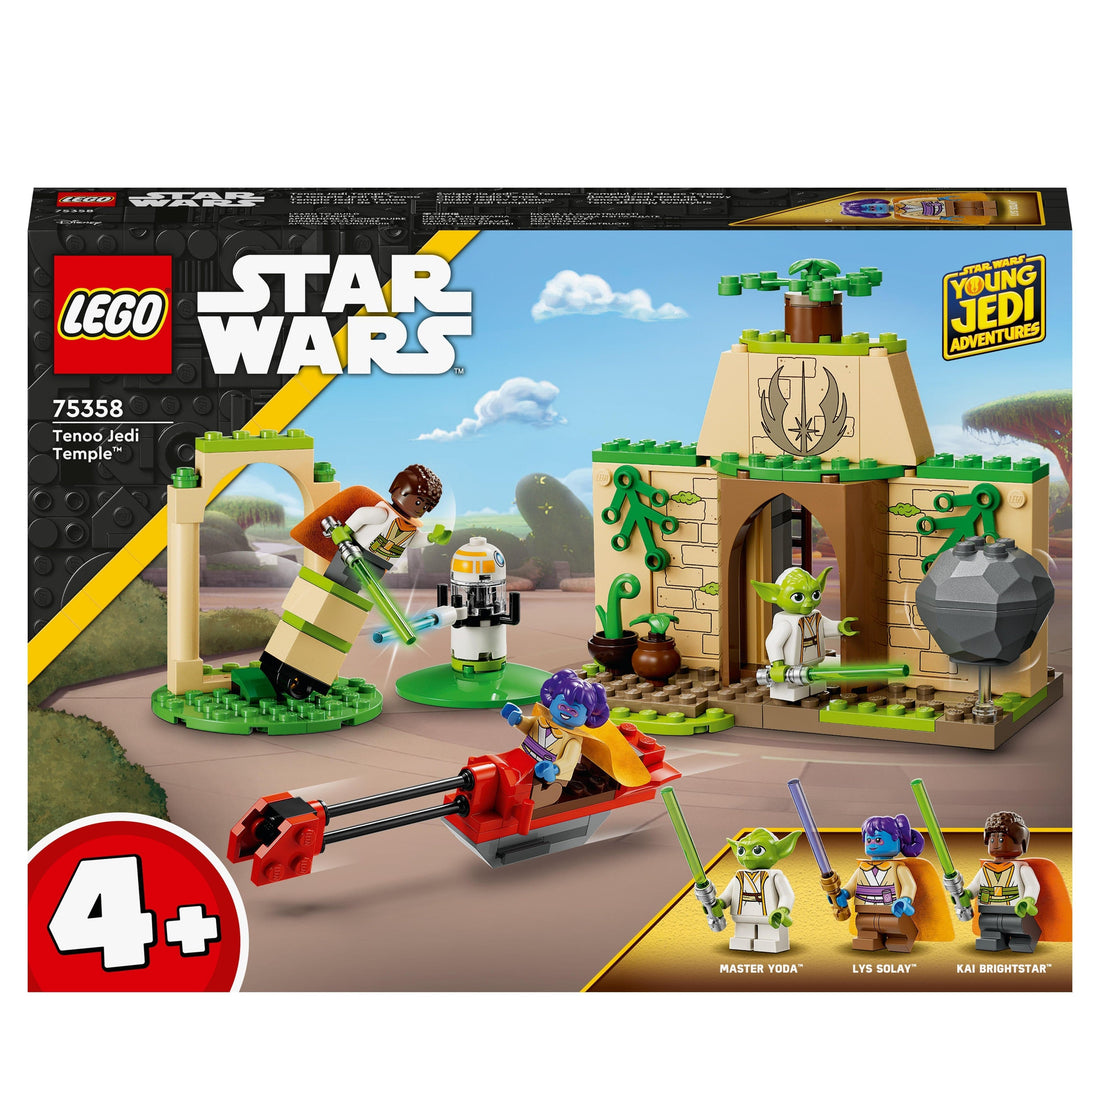 LEGO Star Wars Tenoo Jedi Temple with Kai Brightstar and Yoda Figures